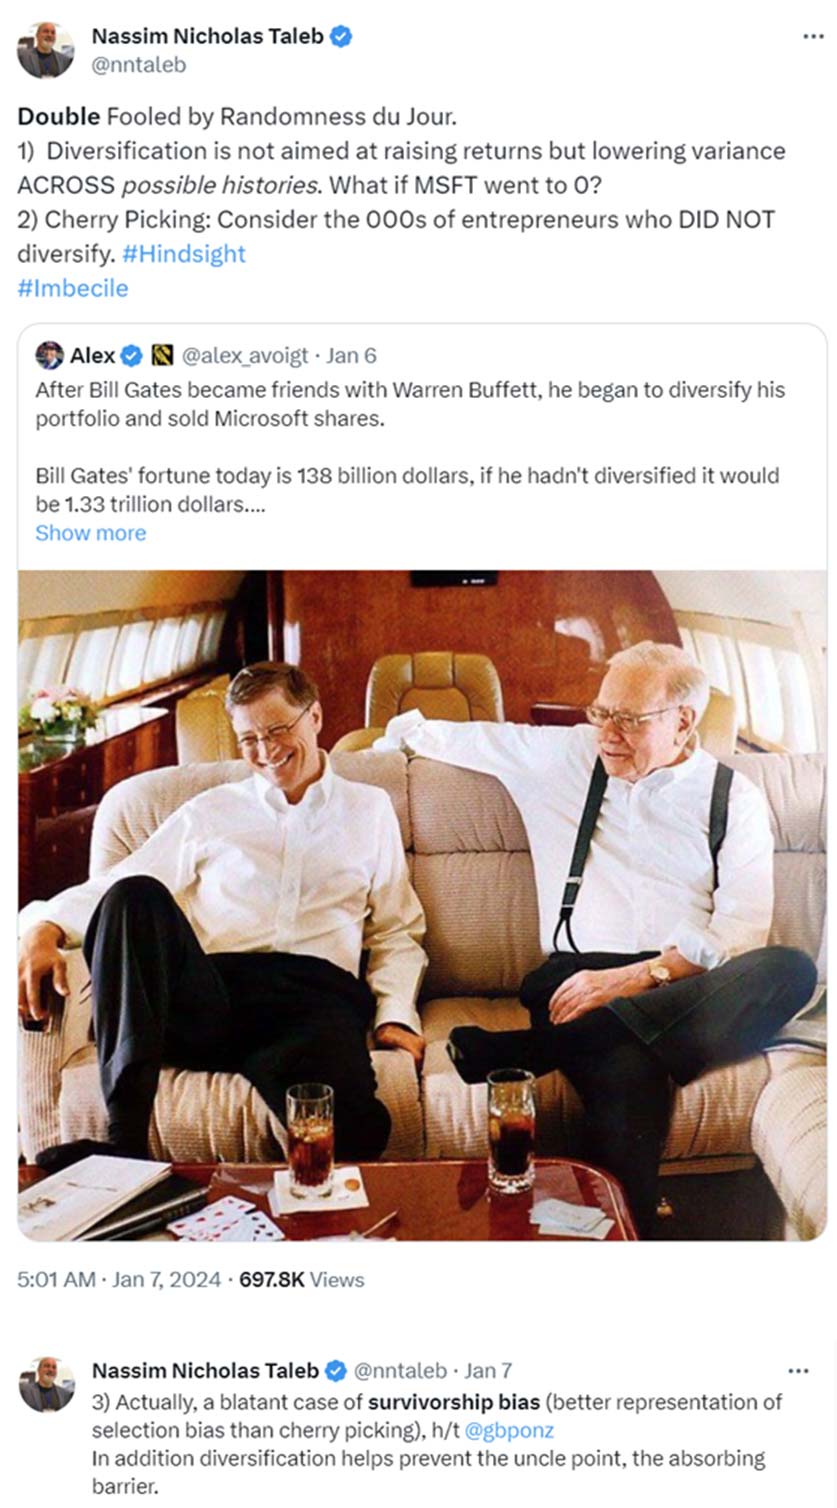 X repost of Alex’s post by Nassim Nicholas Taleb about the outcome of Bill Gates’ portfolio diversity after befriending Warren Buffet.